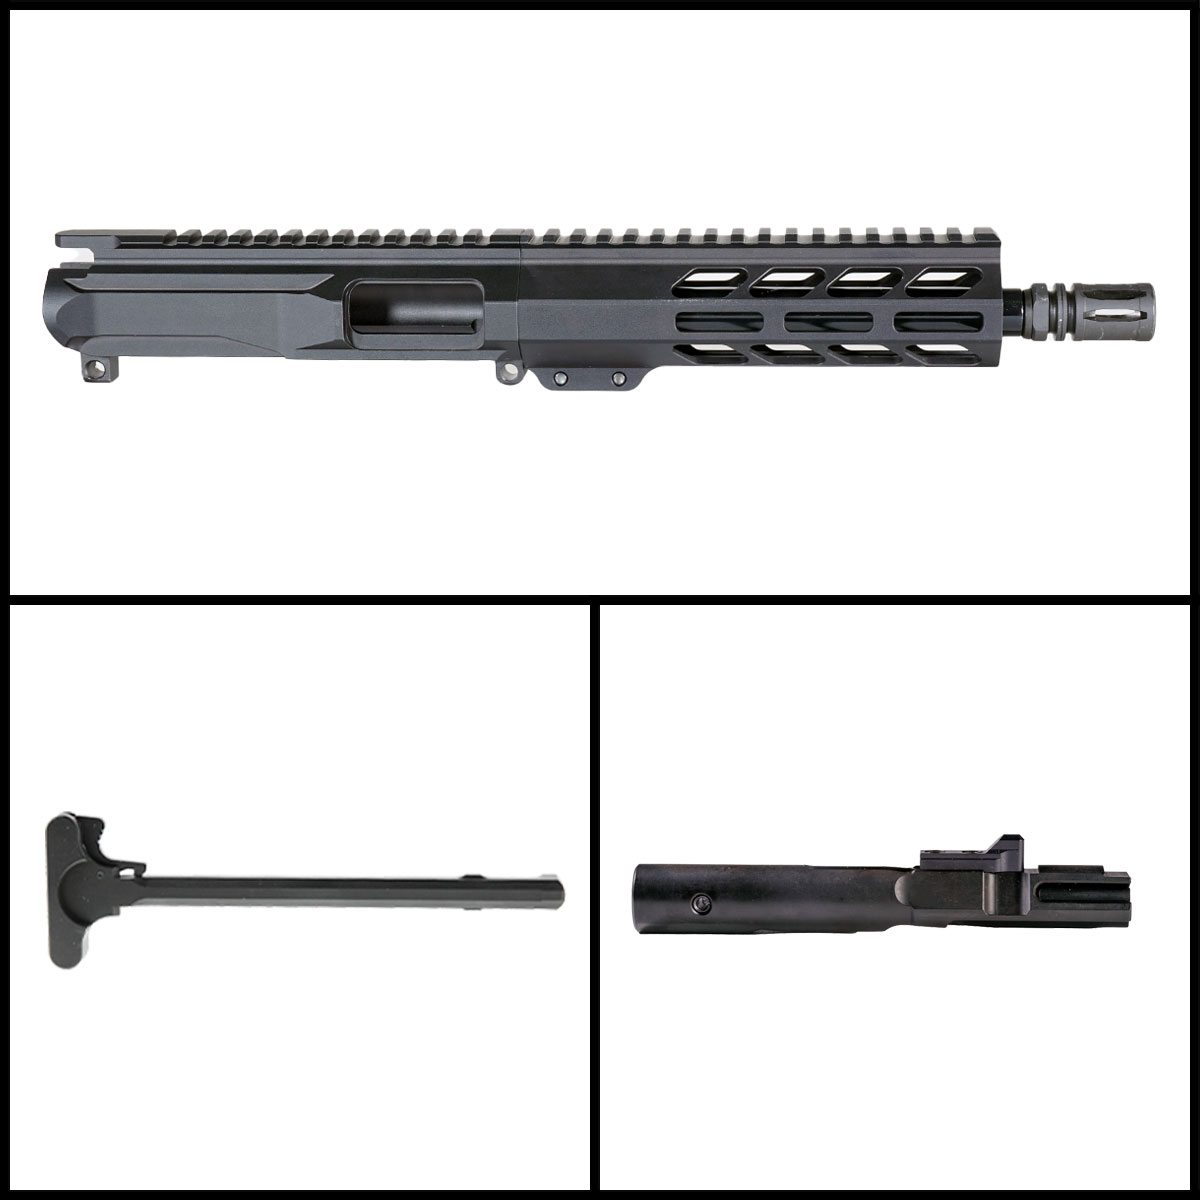 DTT 'Eternal Night Gen 2' 8.5-inch AR-15 9mm Nitride Pistol Complete Upper Build Kit